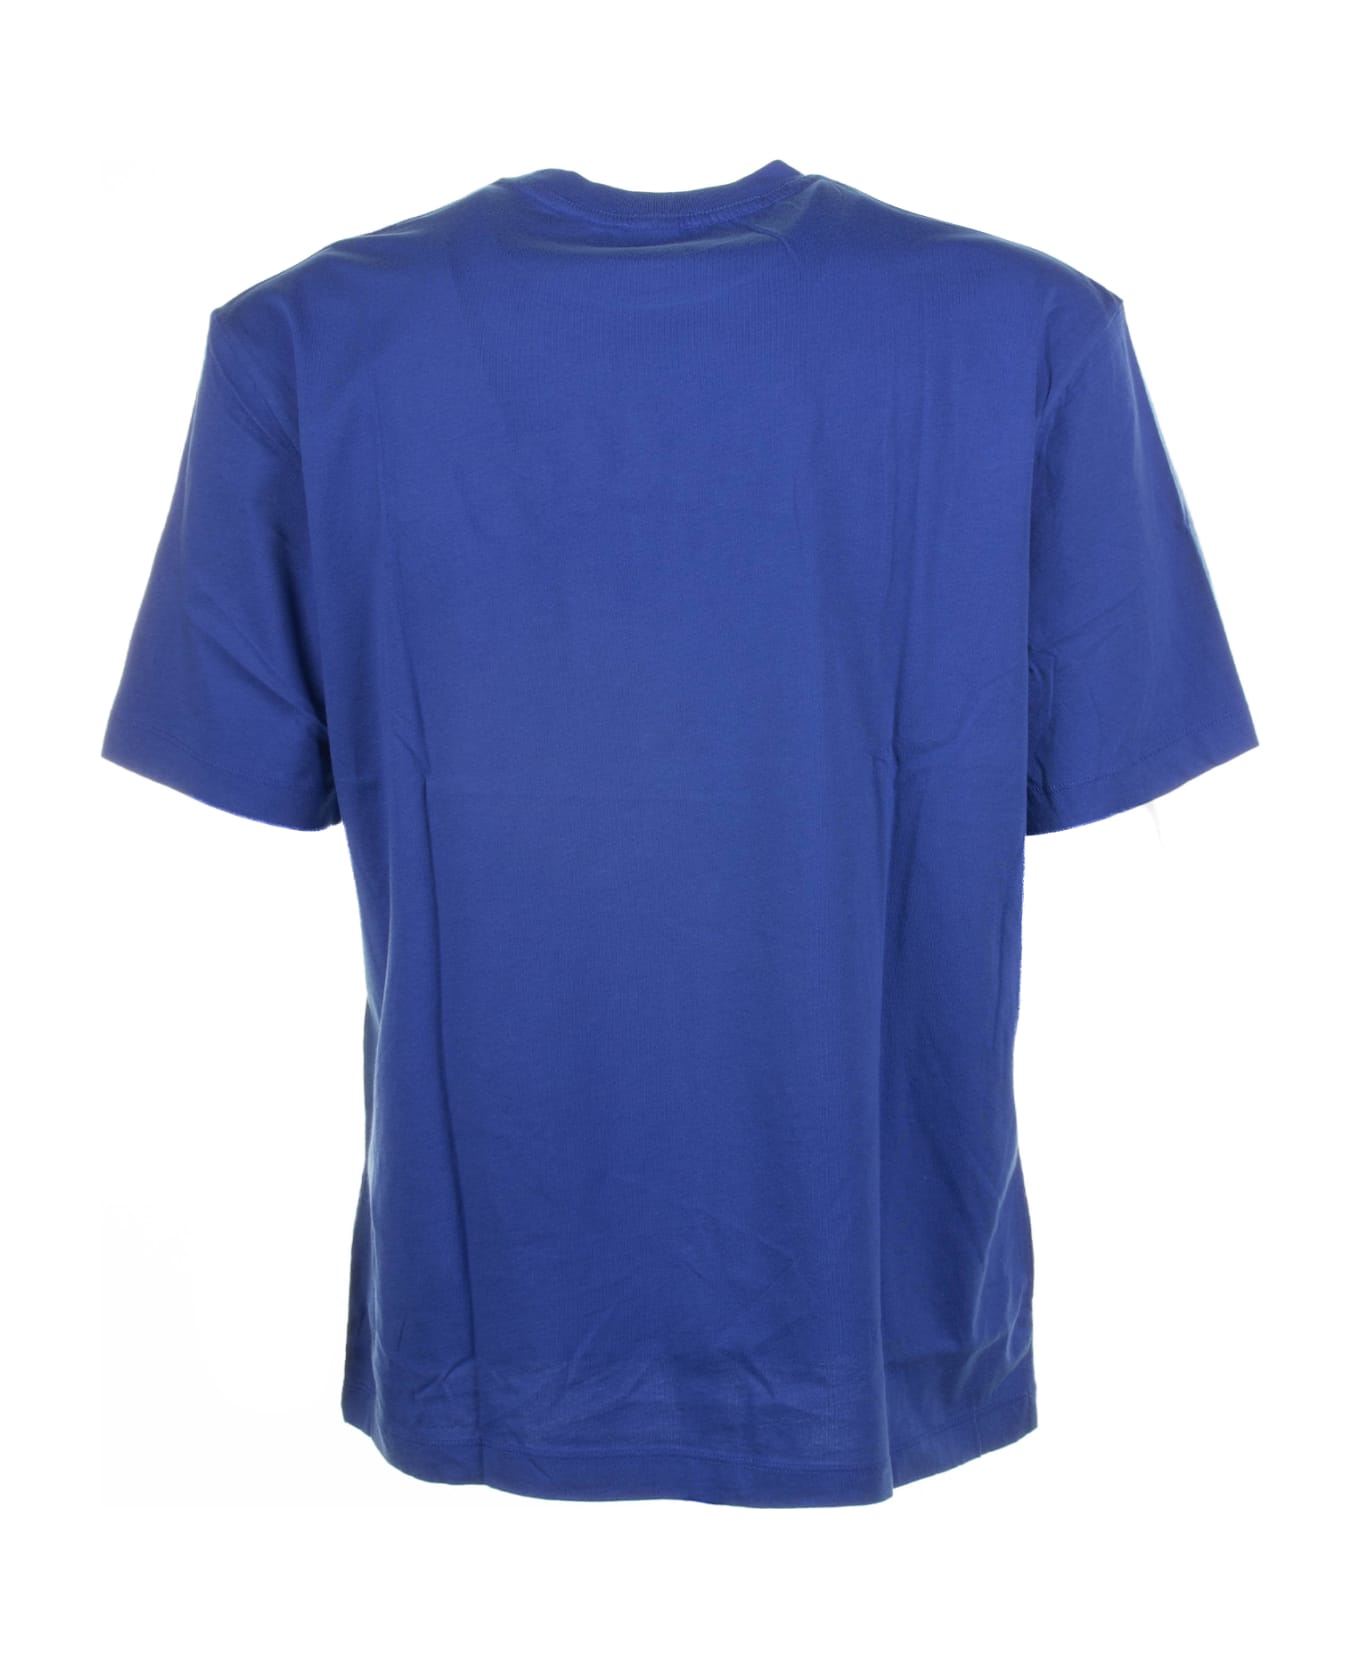 Blauer Blue Cotton T-shirt - MOLTO BLU